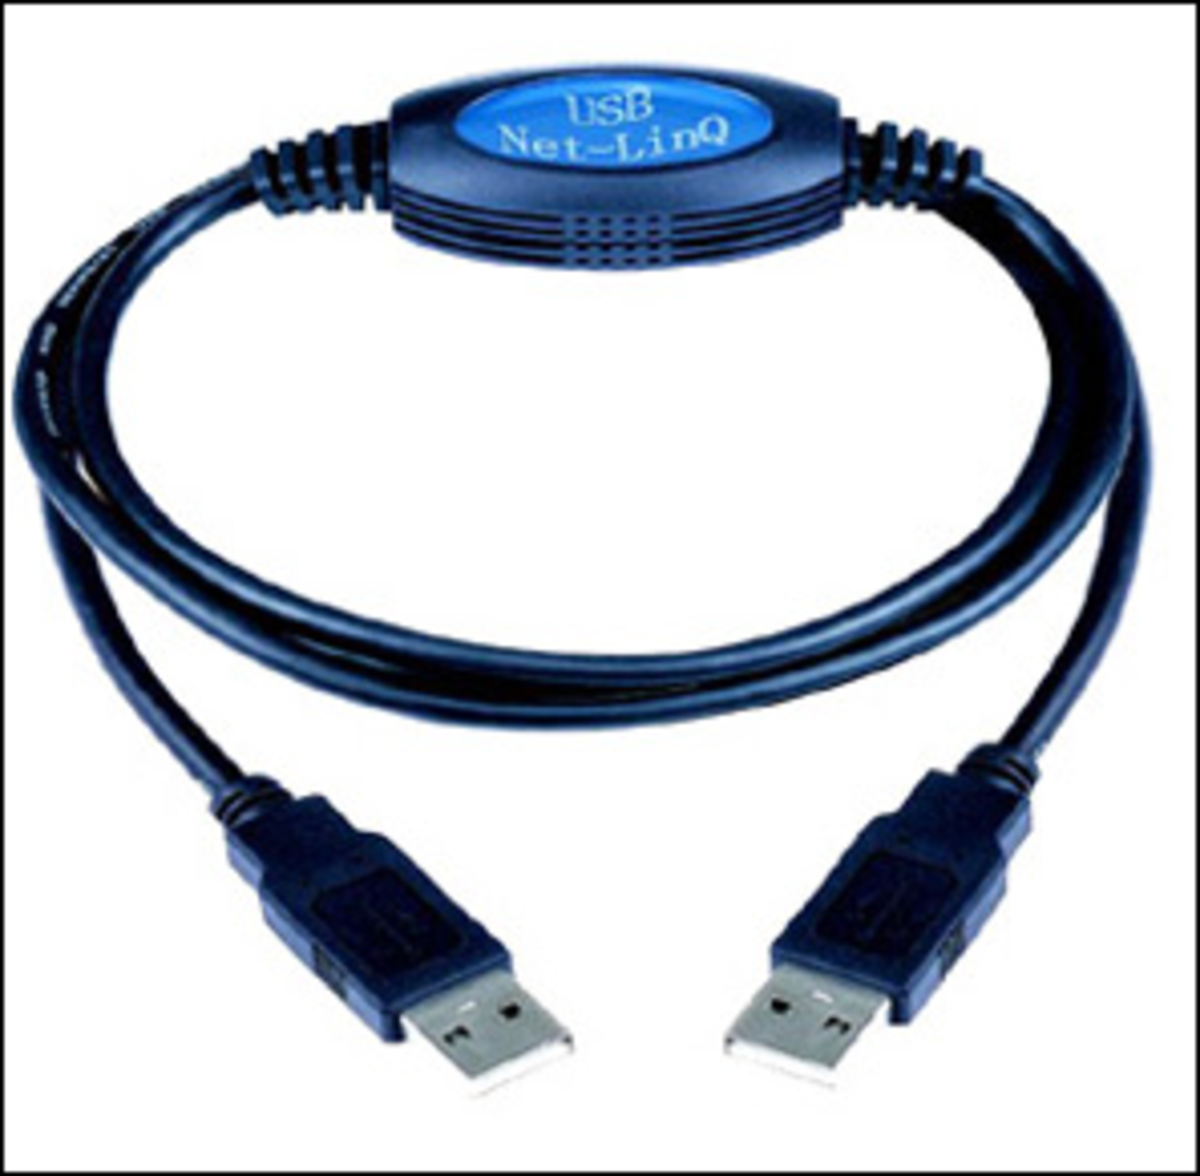 USB bridge cable